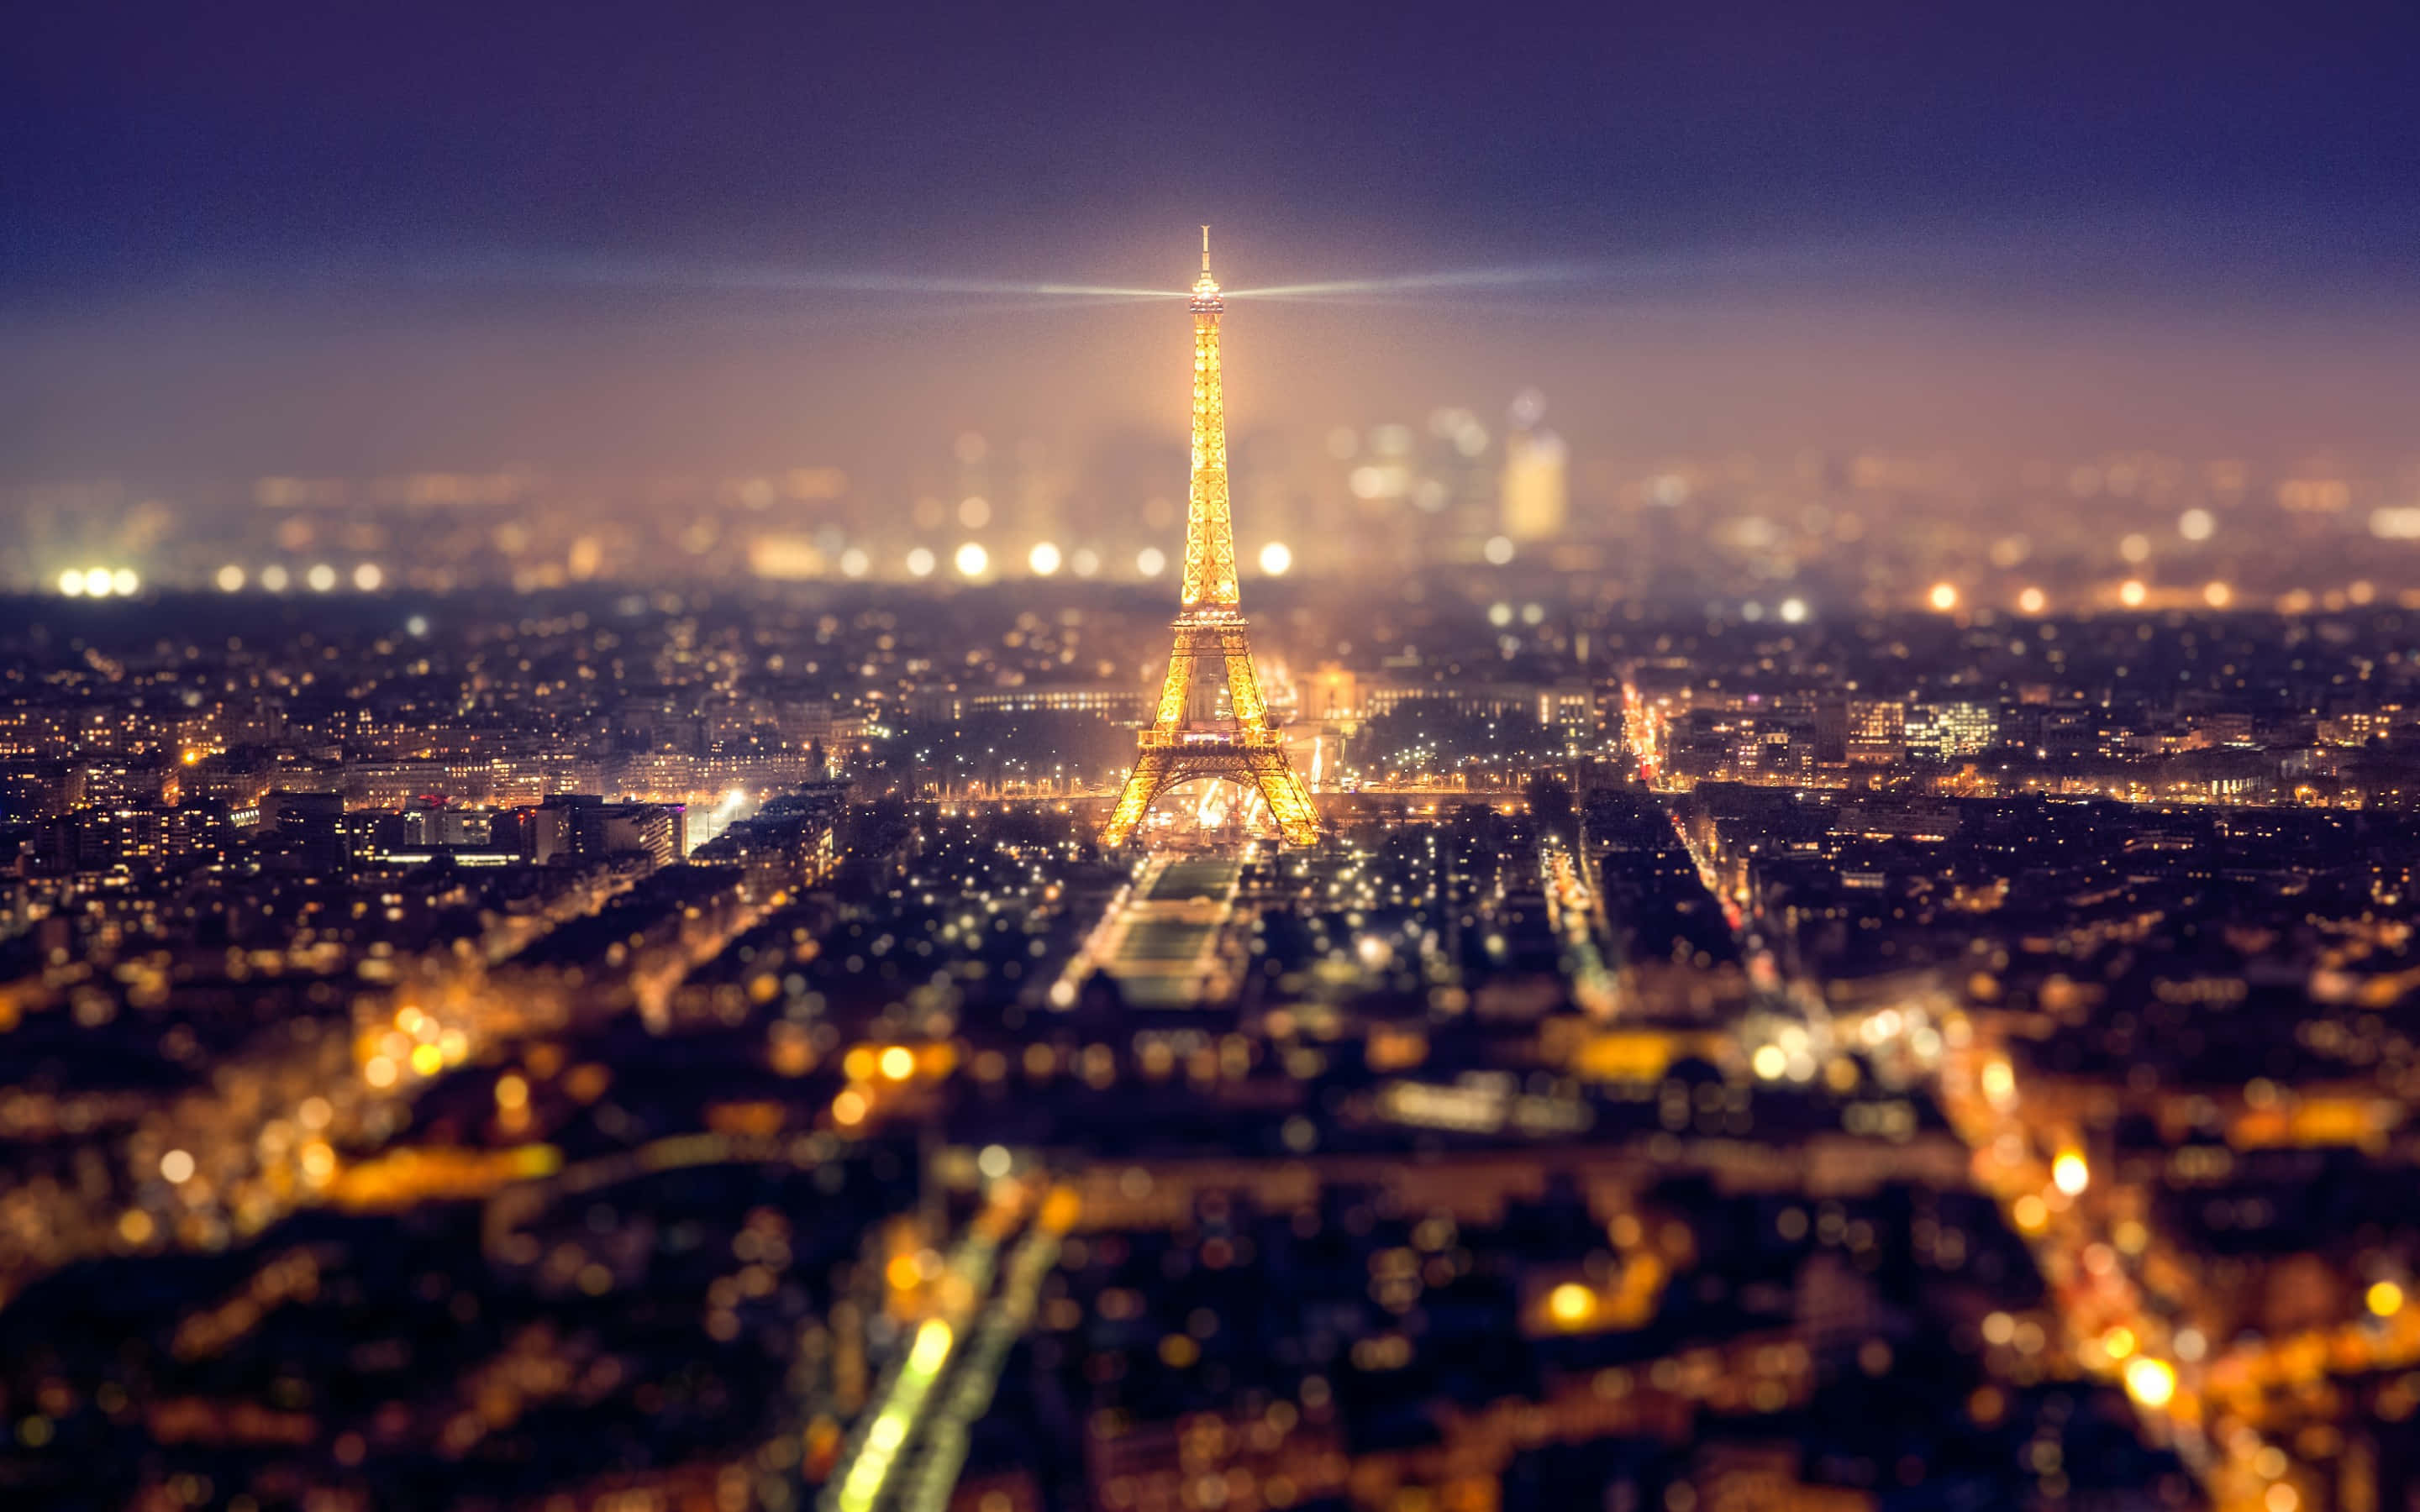 Illuminated Eiffel Tower at night in Paris, France